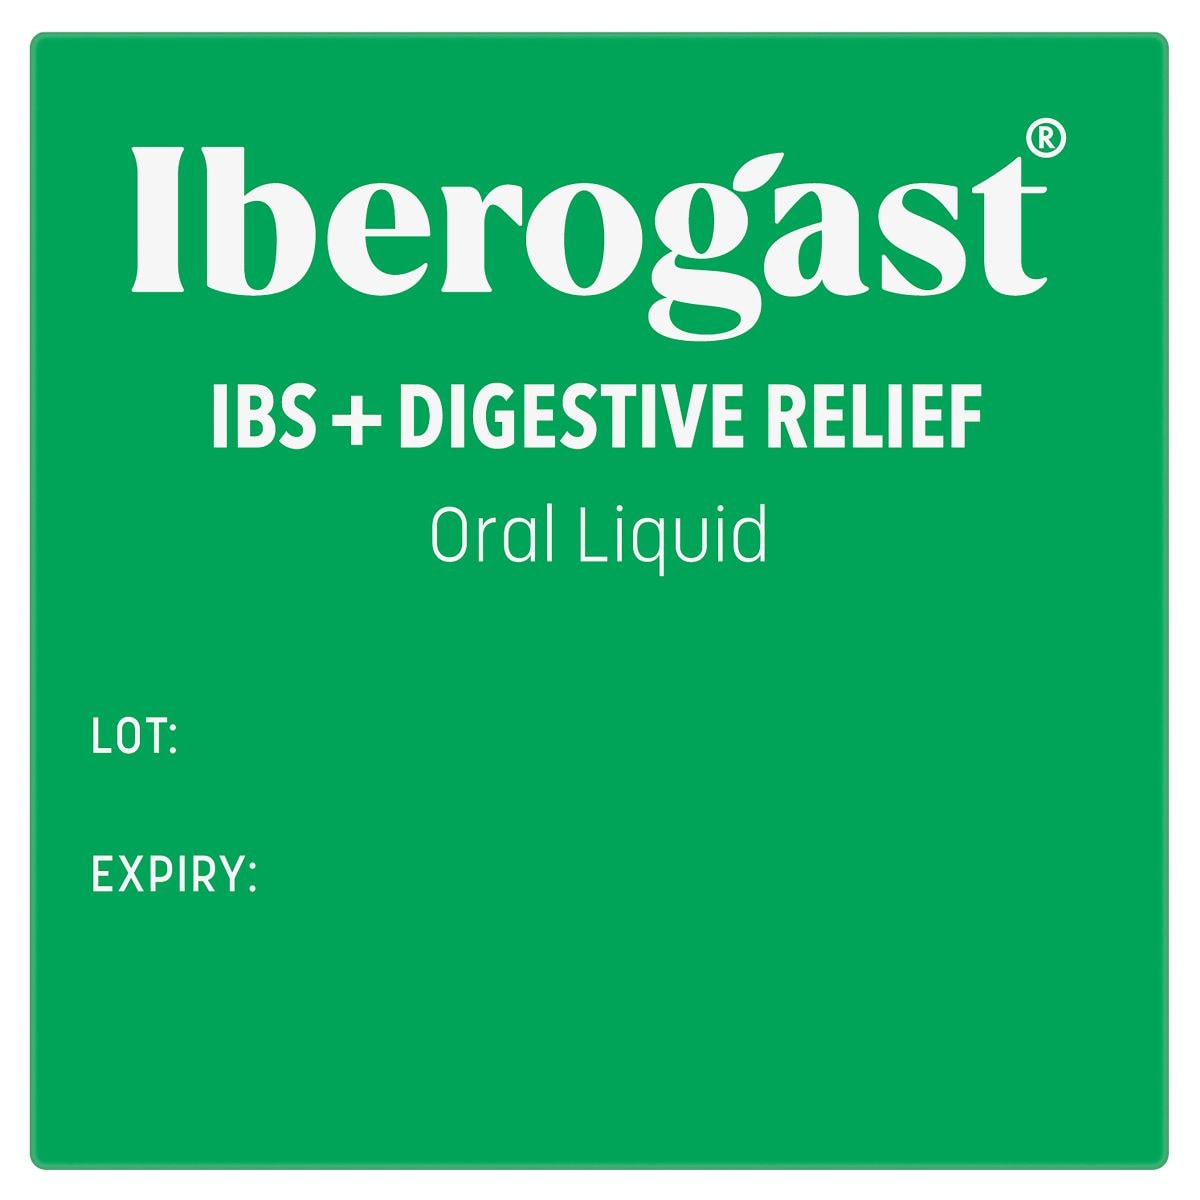 Iberogast IBS + Digestive Relief Oral Liquid 50ml